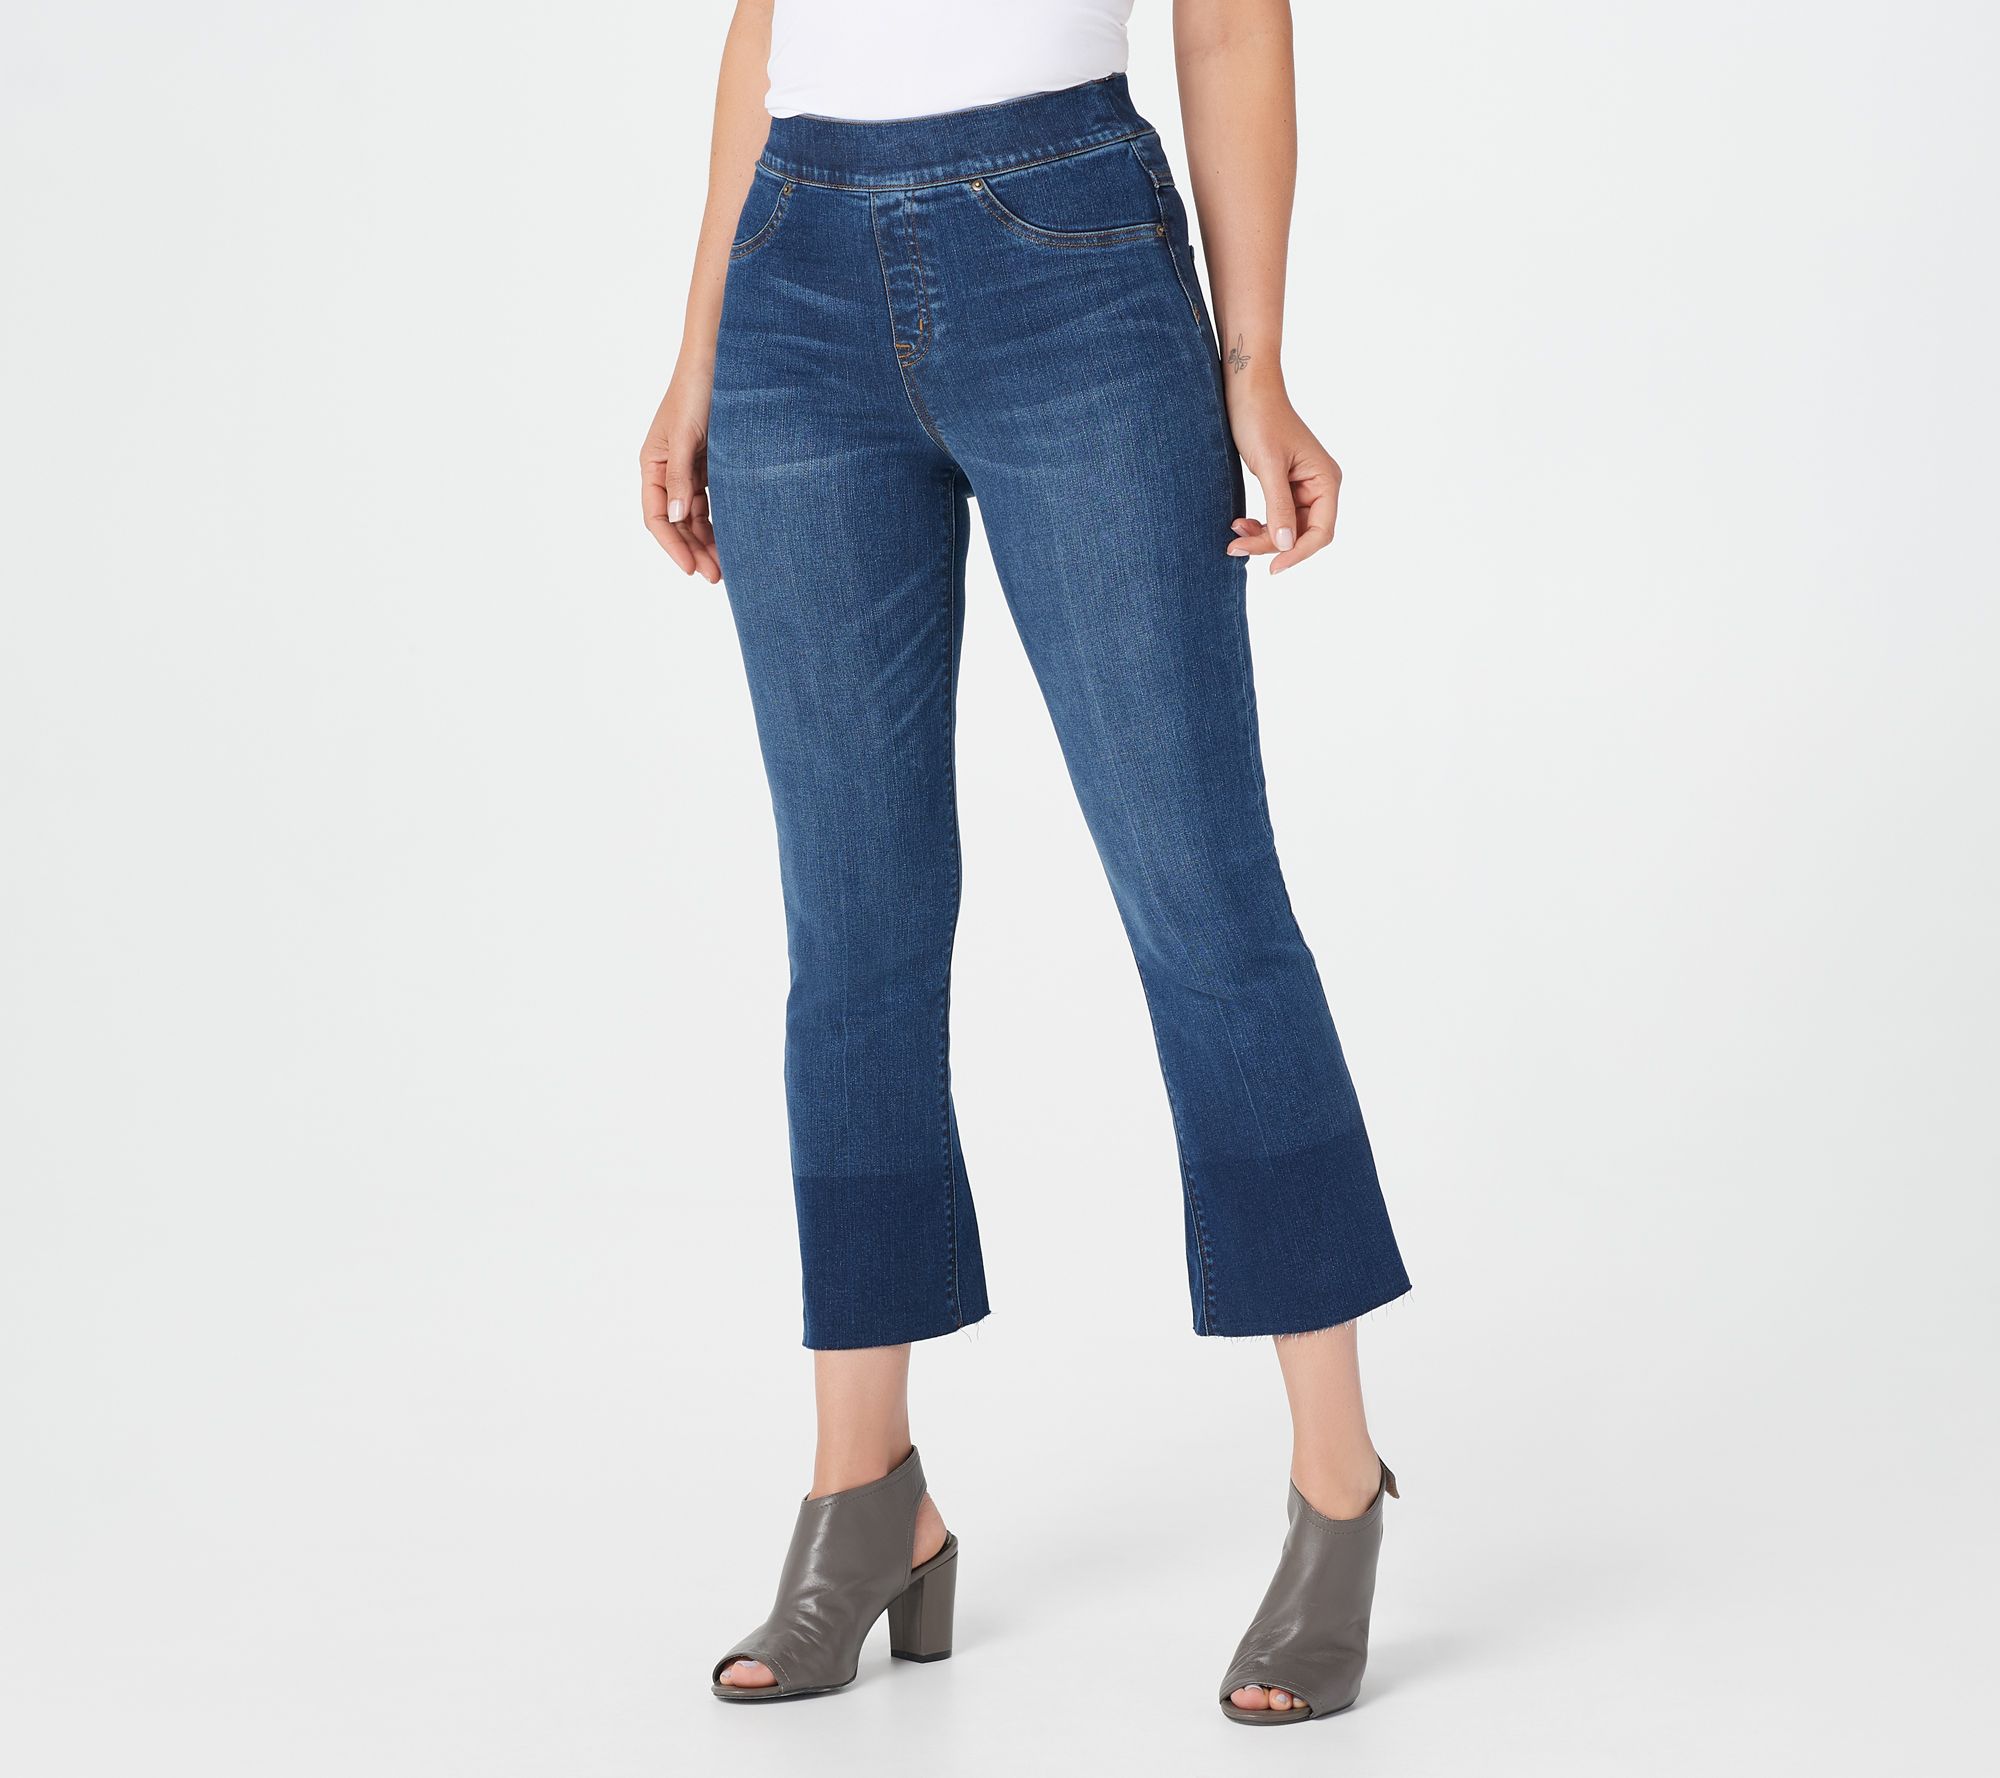 spanx jeans on sale